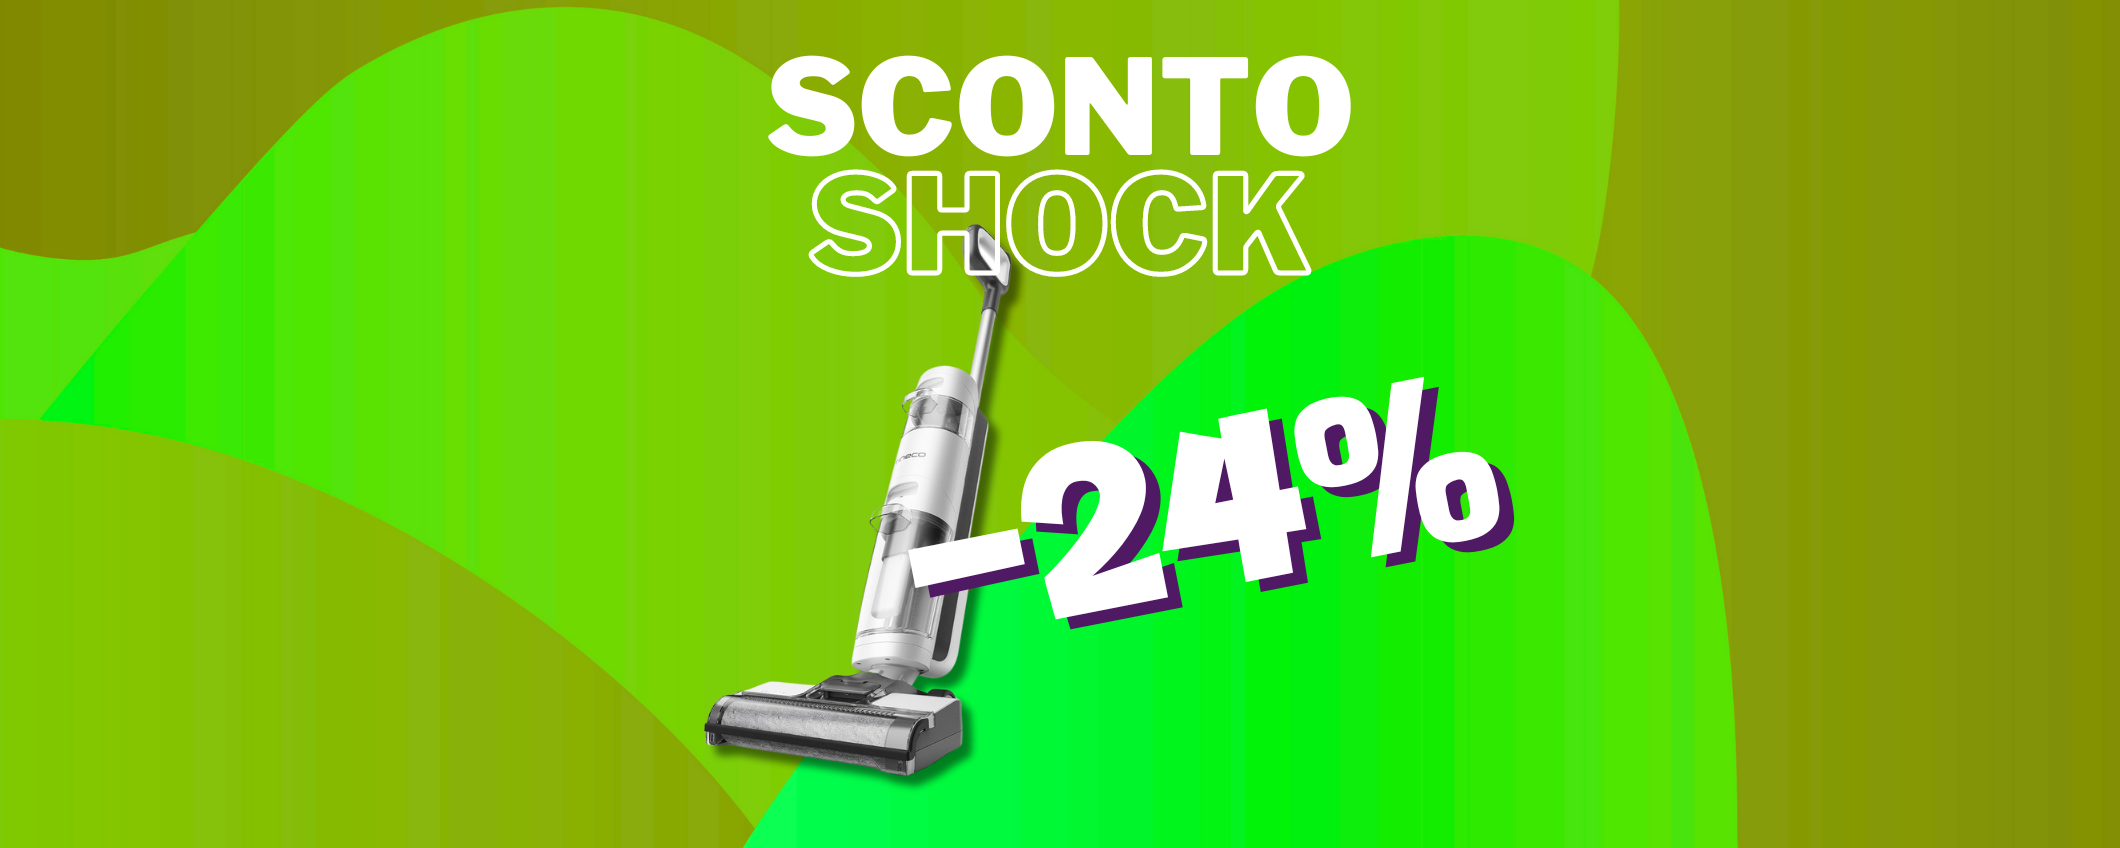 2 in 1 con Tineco iFloor 3 Breeze Plus in sconto SHOCK (-24%)